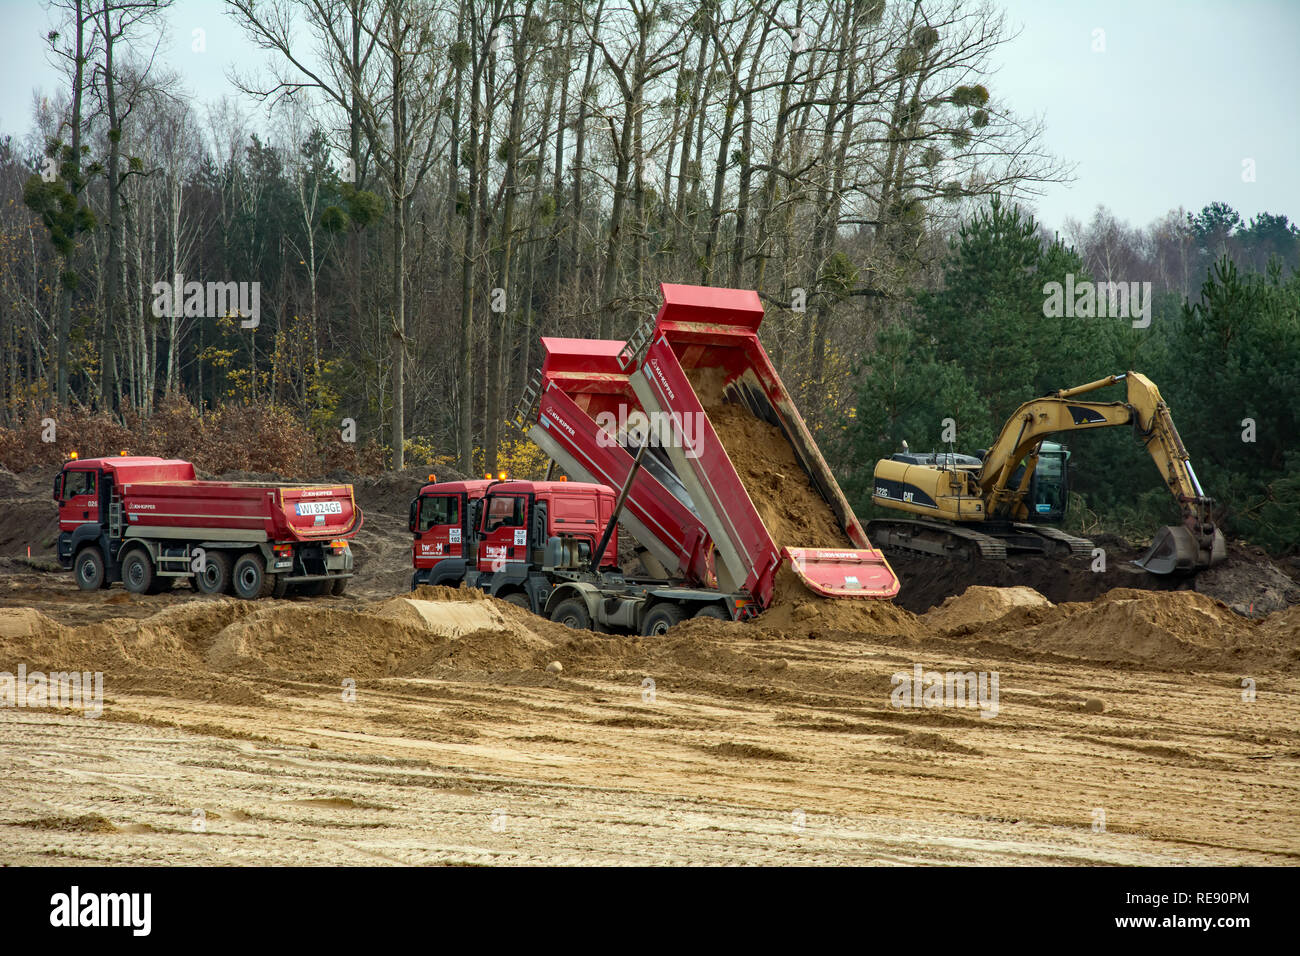 KRUSZYN KRAJENSKI, KUJAWSKO-POMORSKIE/POLAND - NOVEMBER 13, 2017 - S5 construction site with three man kipper dumpers discharging their load and excav Stock Photo